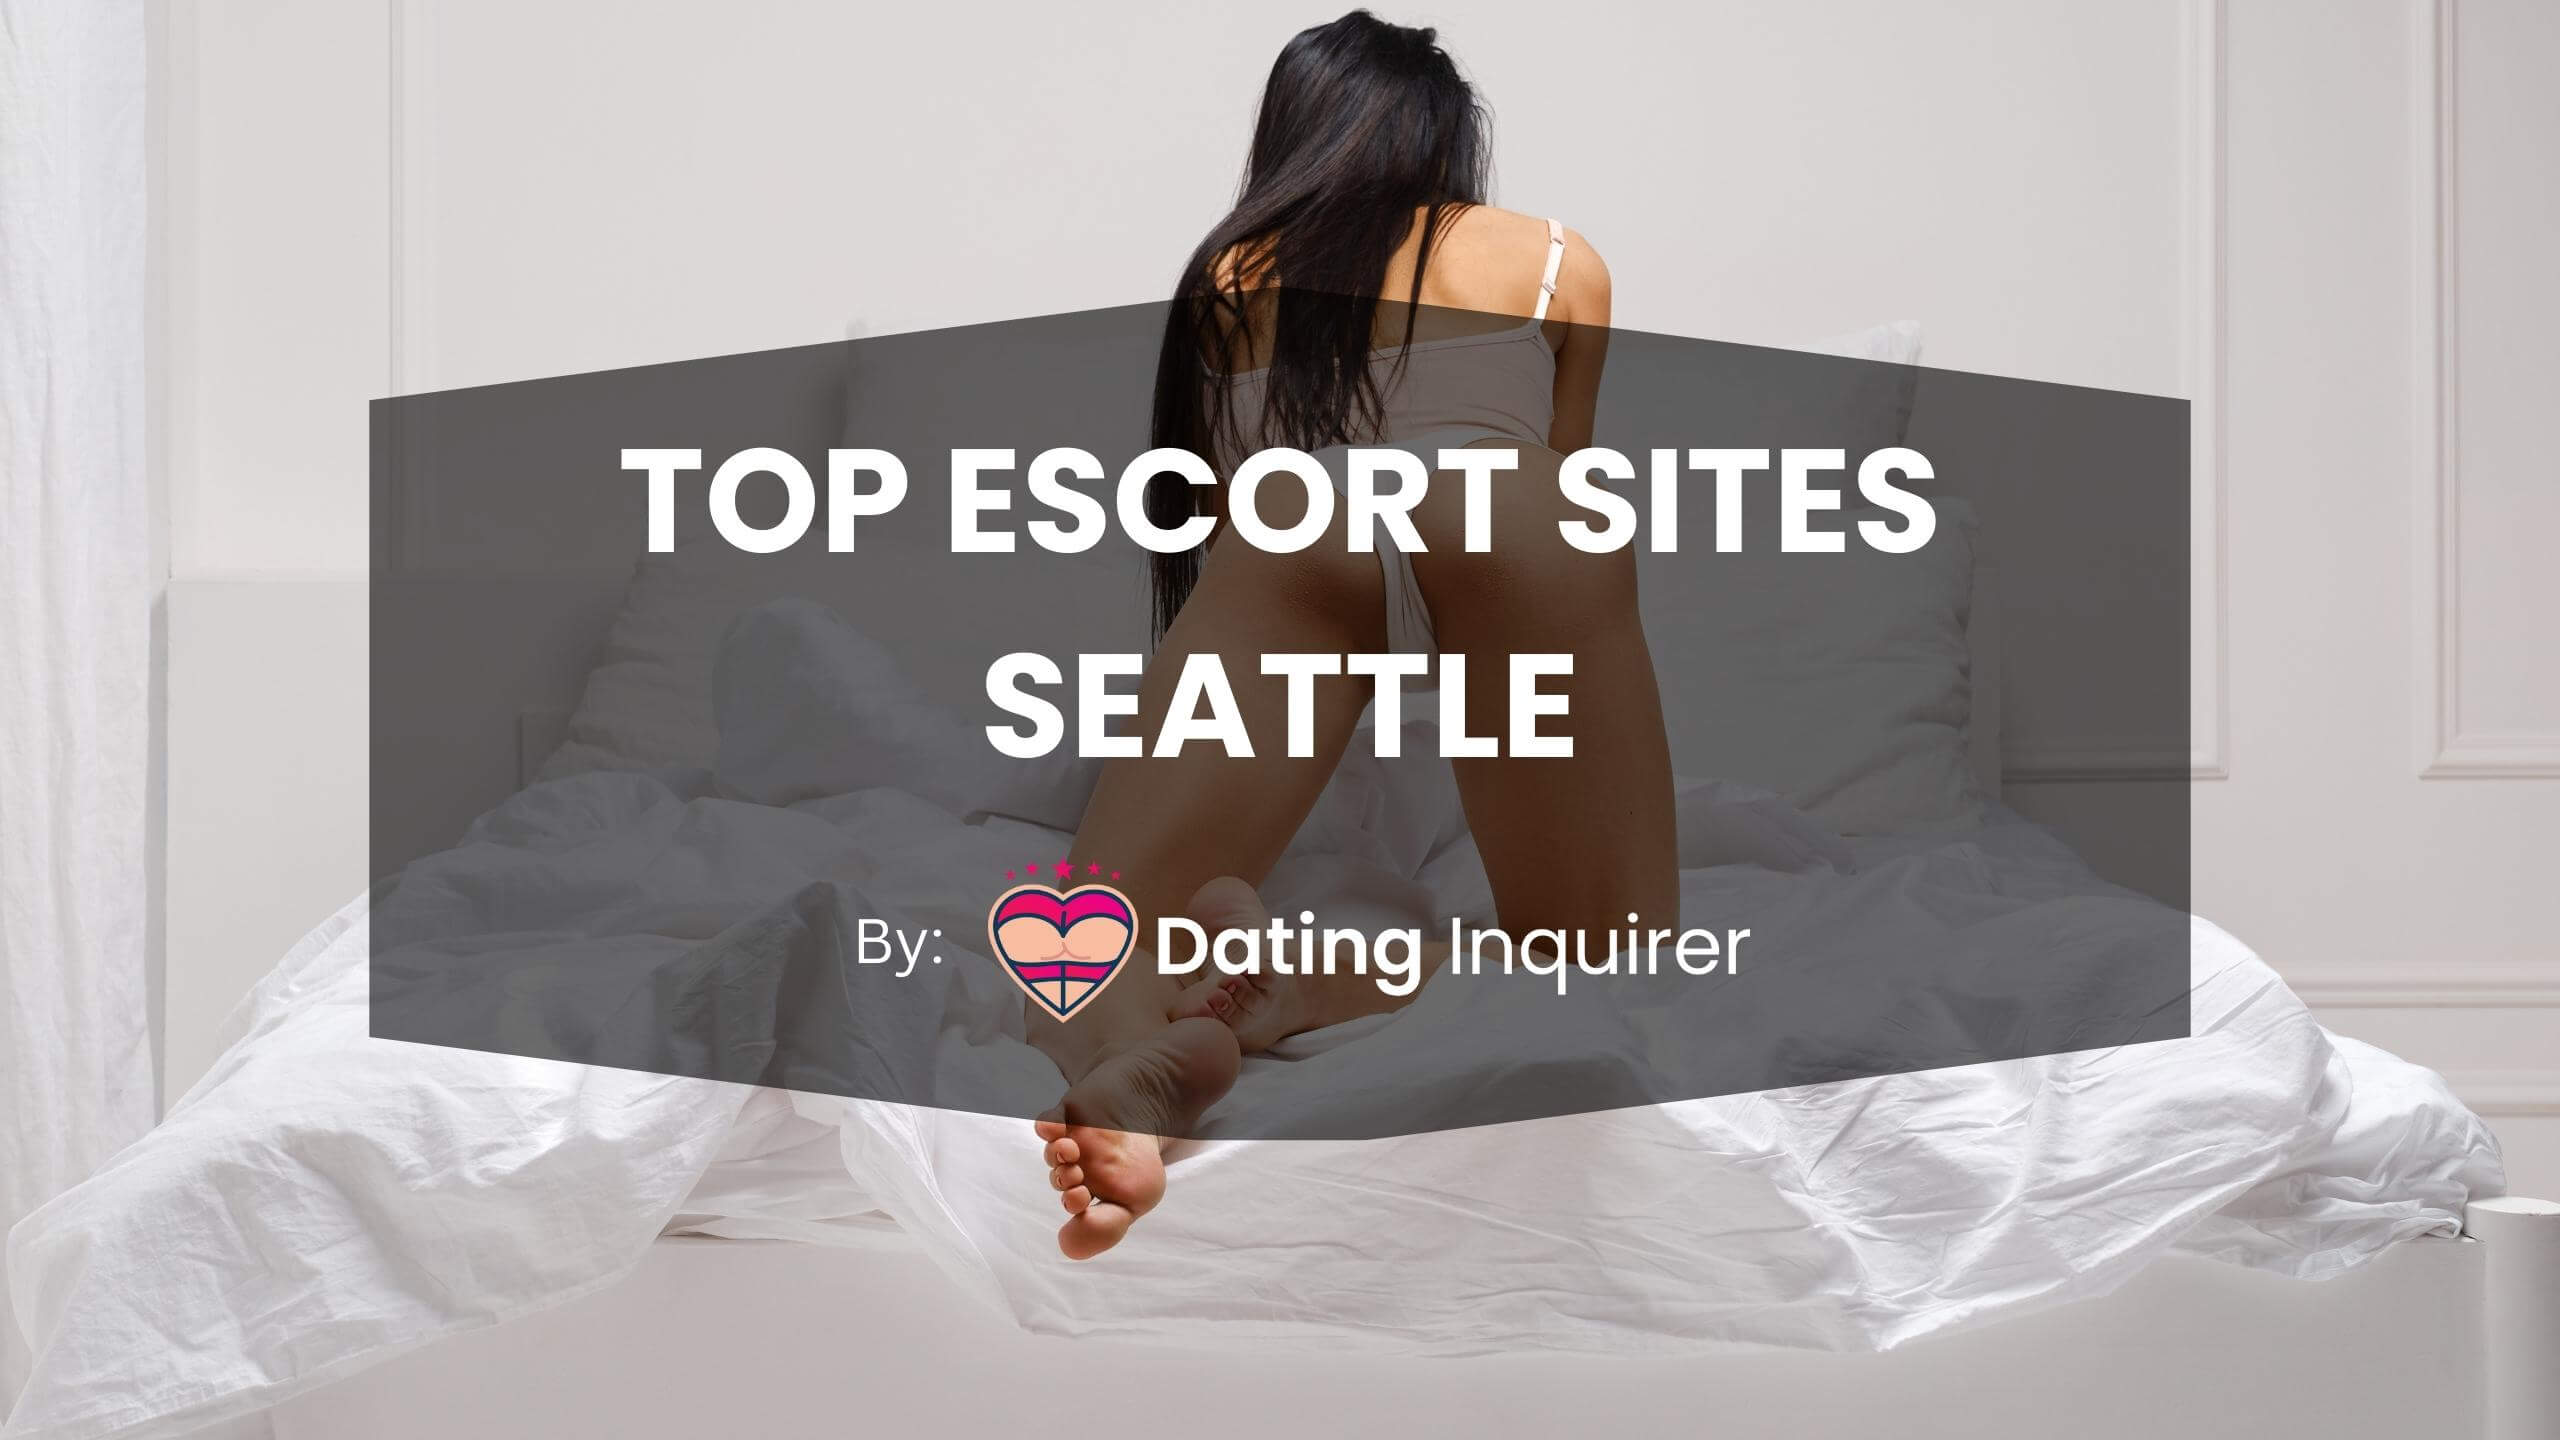 top escort sites seattle cover